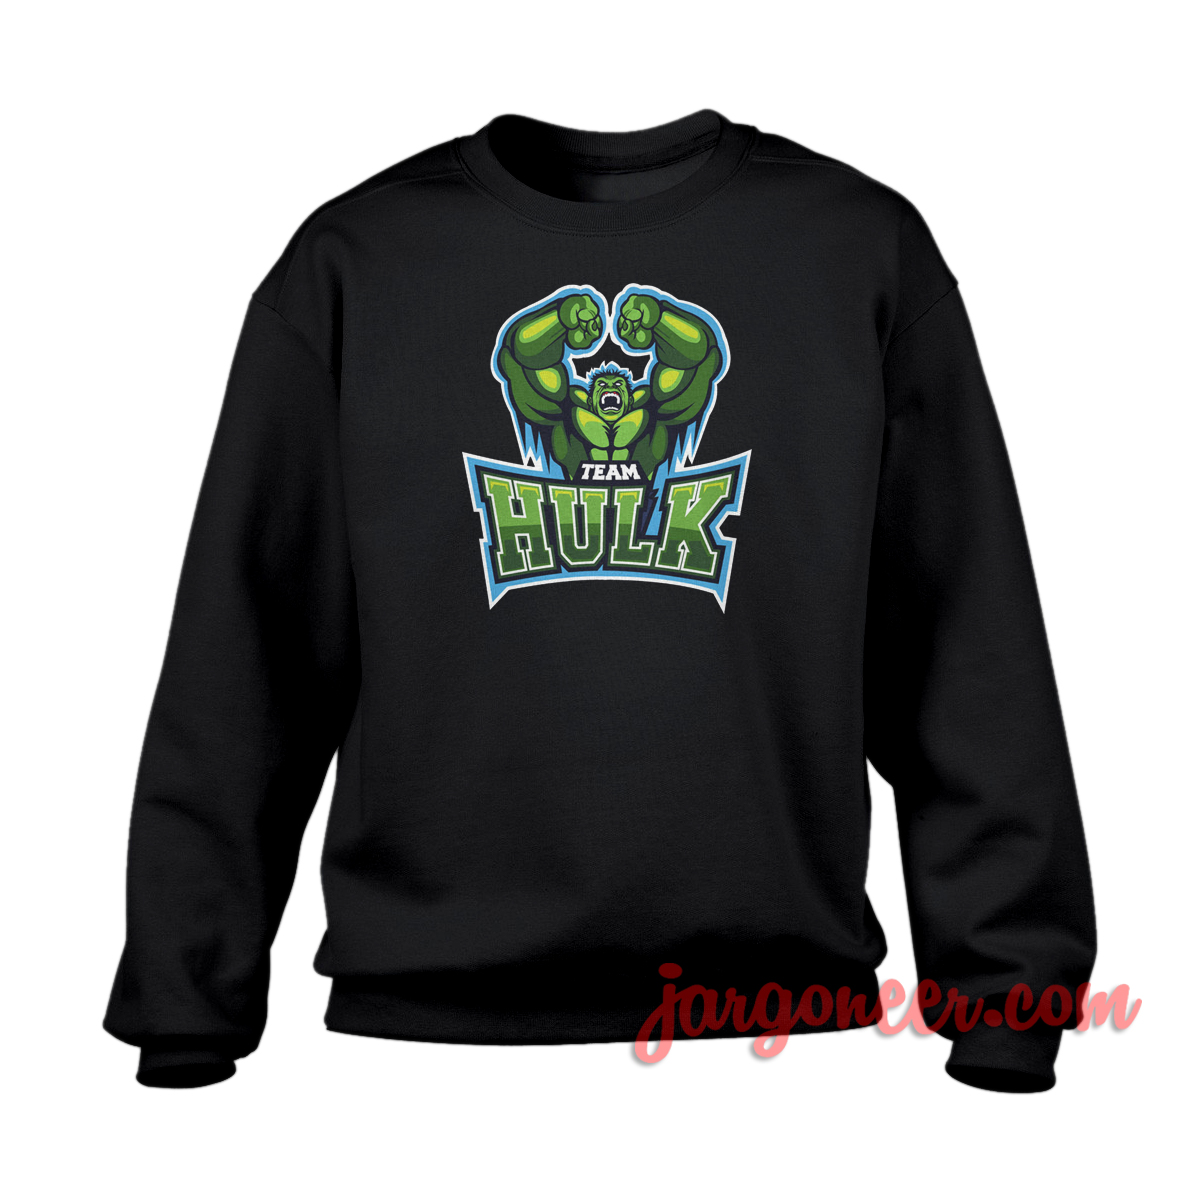 Team Hulk - Shop Unique Graphic Cool Shirt Designs